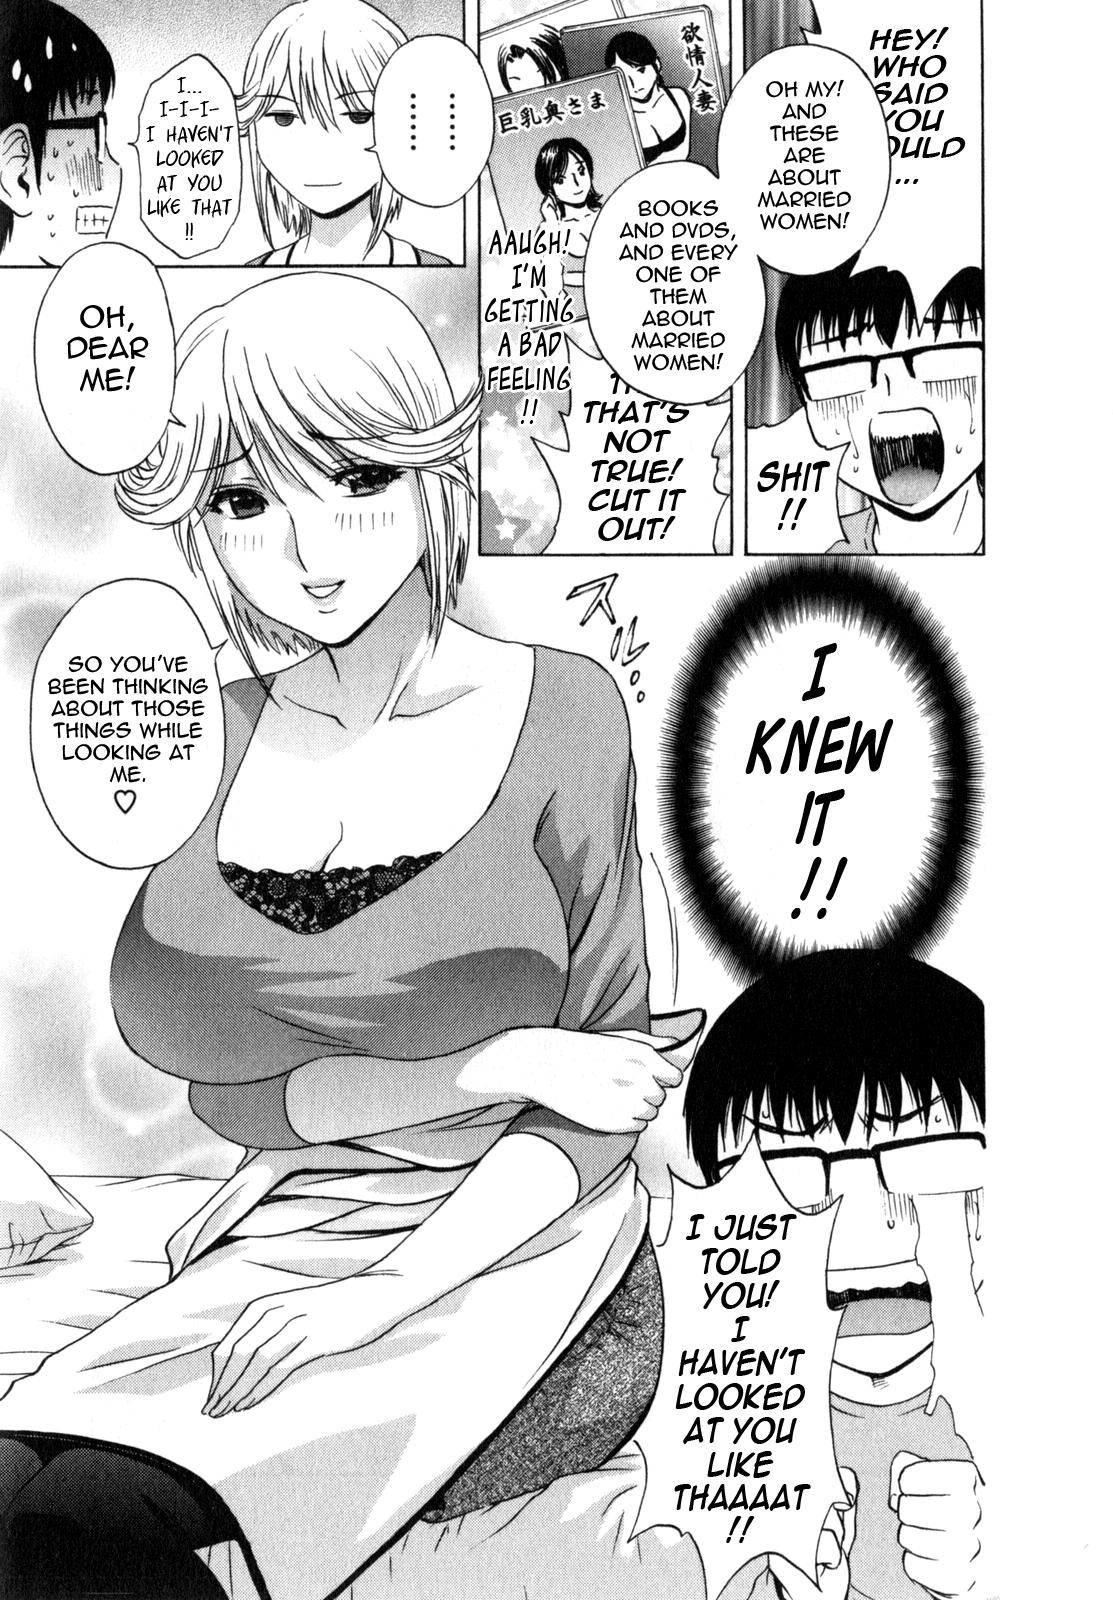 [Hidemaru] Life with Married Women Just Like a Manga 1 - Ch. 1-8 [English] {Tadanohito} 30